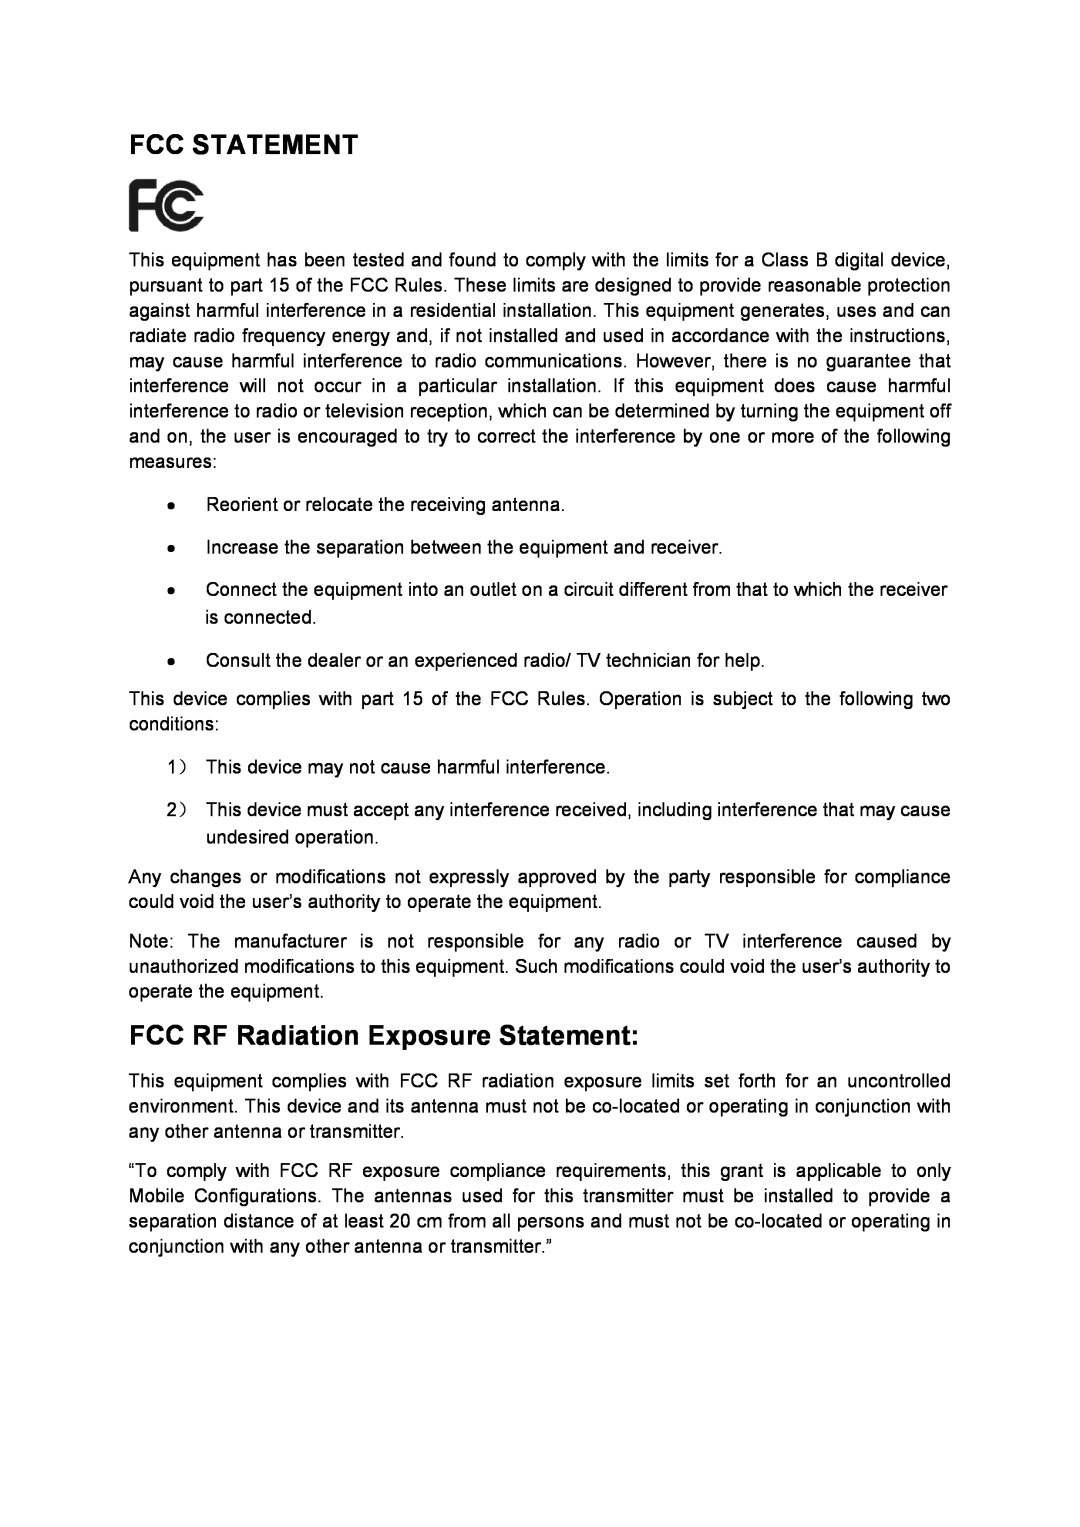 TP-Link WA-890EA manual Fcc Statement, FCC RF Radiation Exposure Statement 